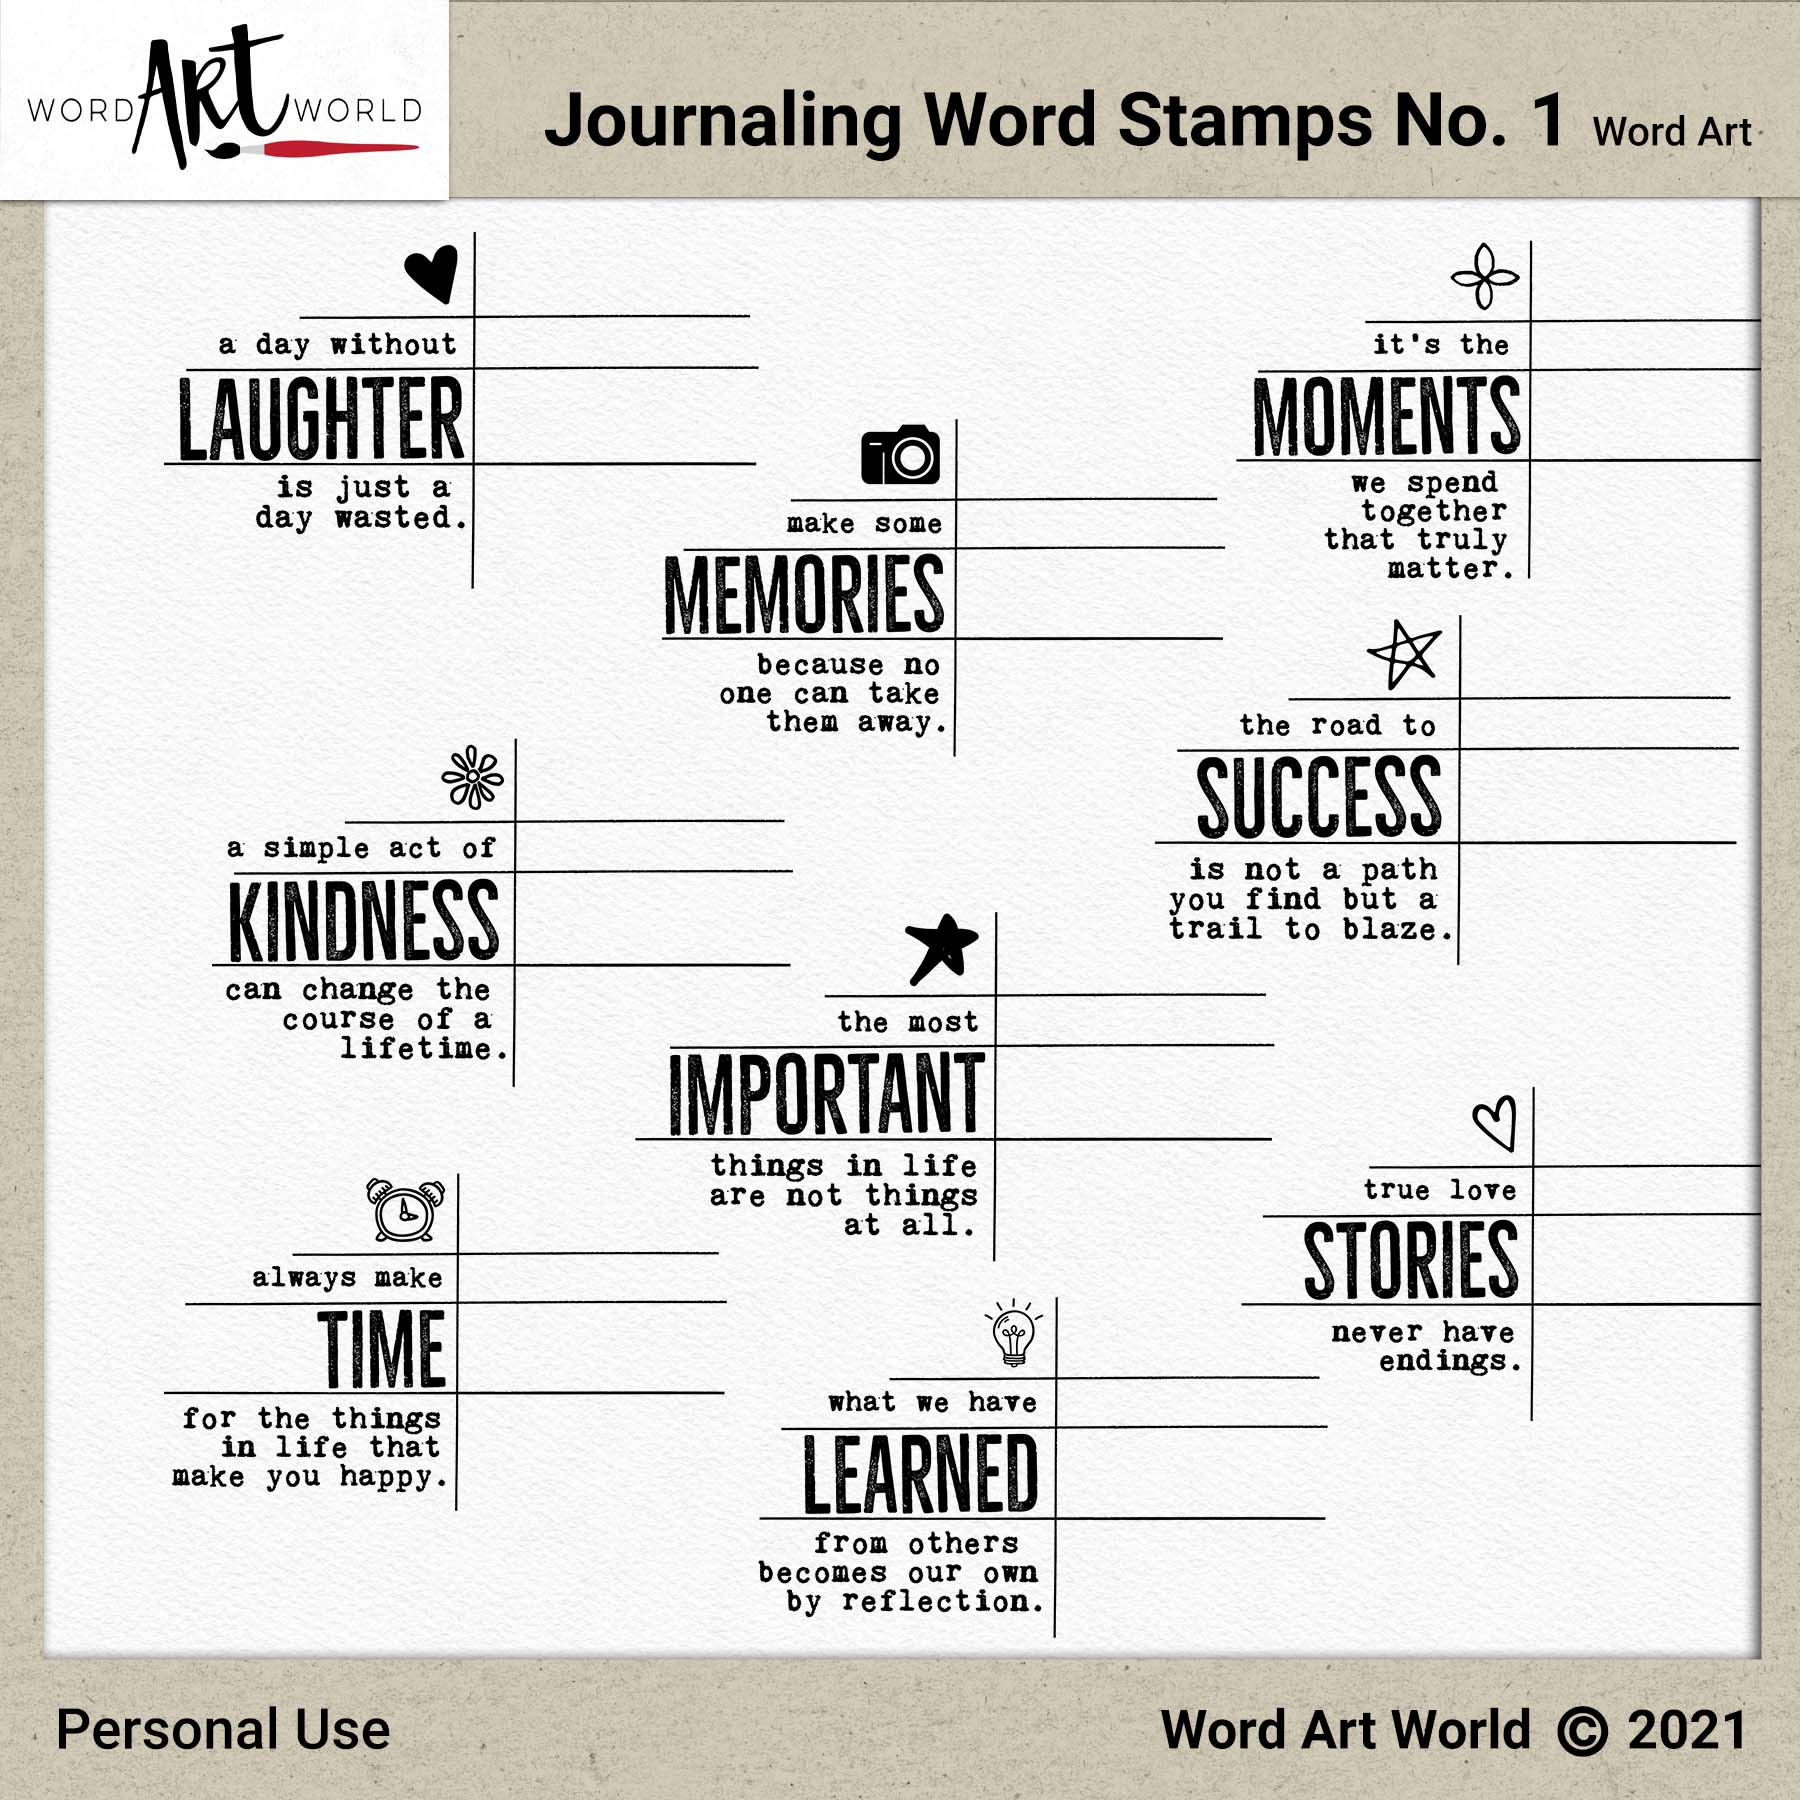 Journaling Word Stamps No. 1 Word Art